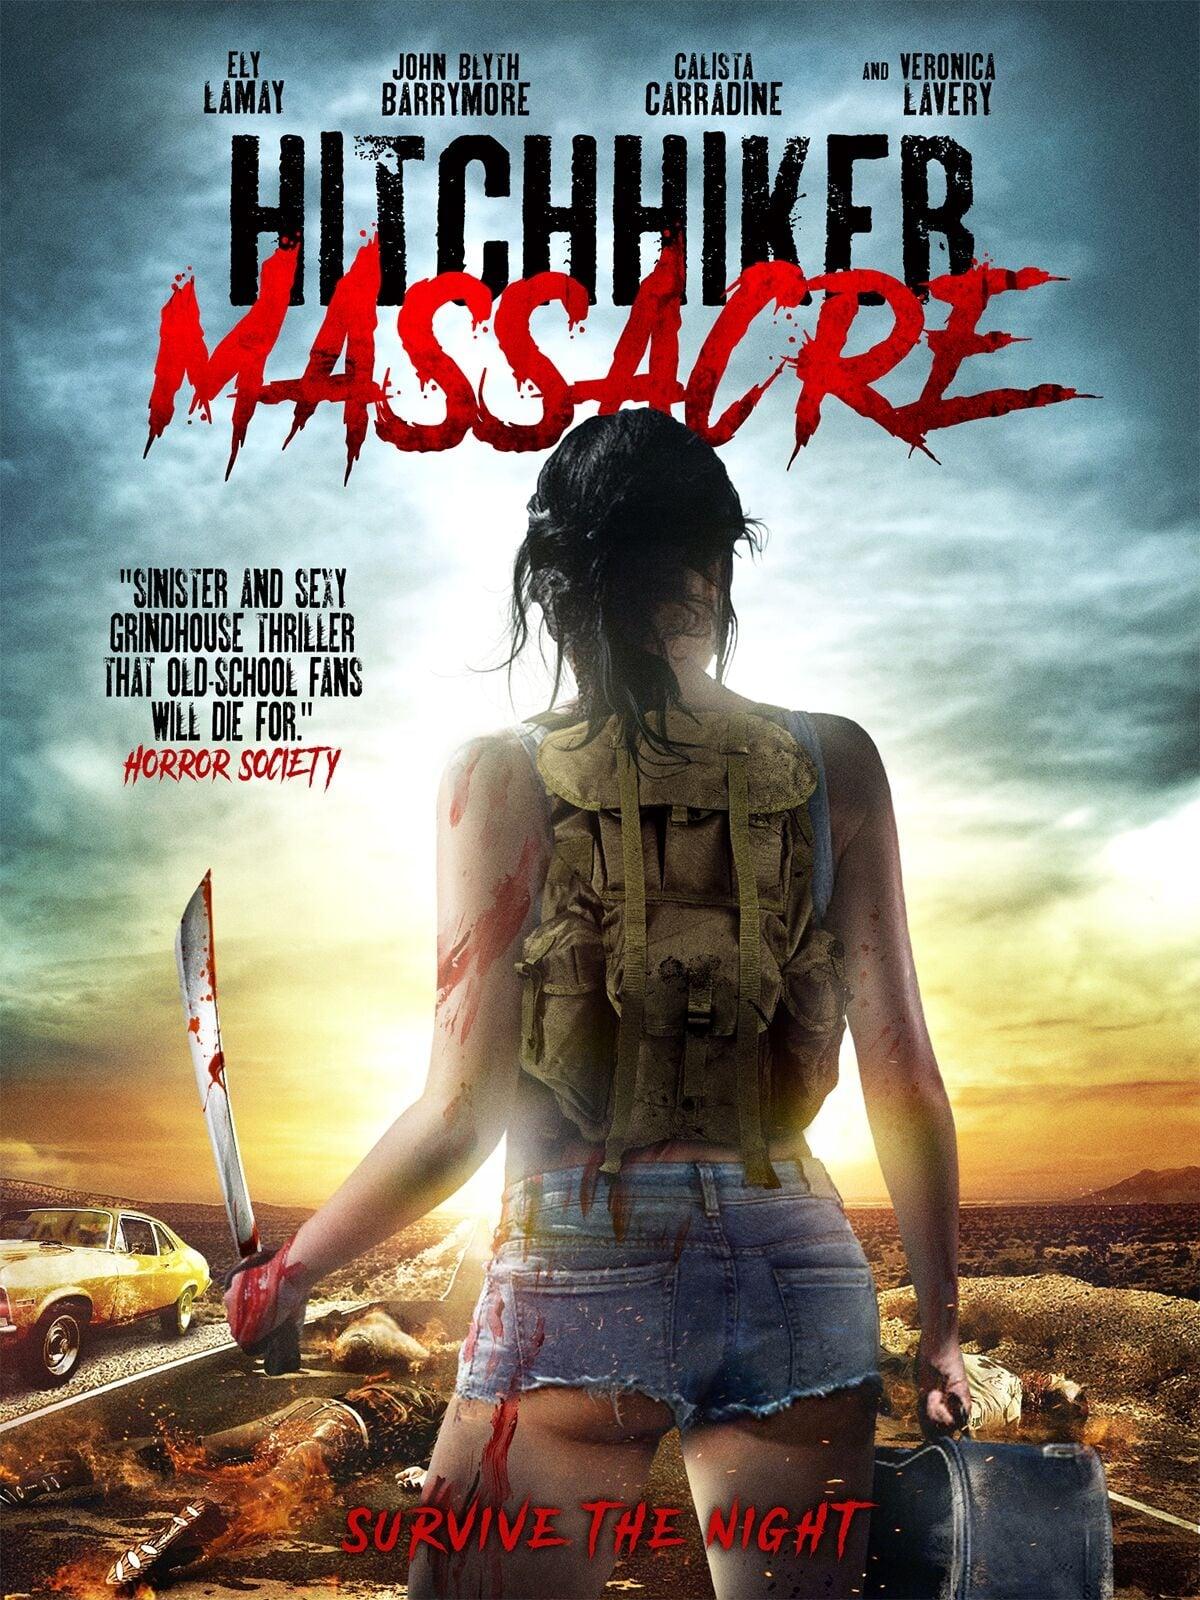 Hitchhiker Massacre poster